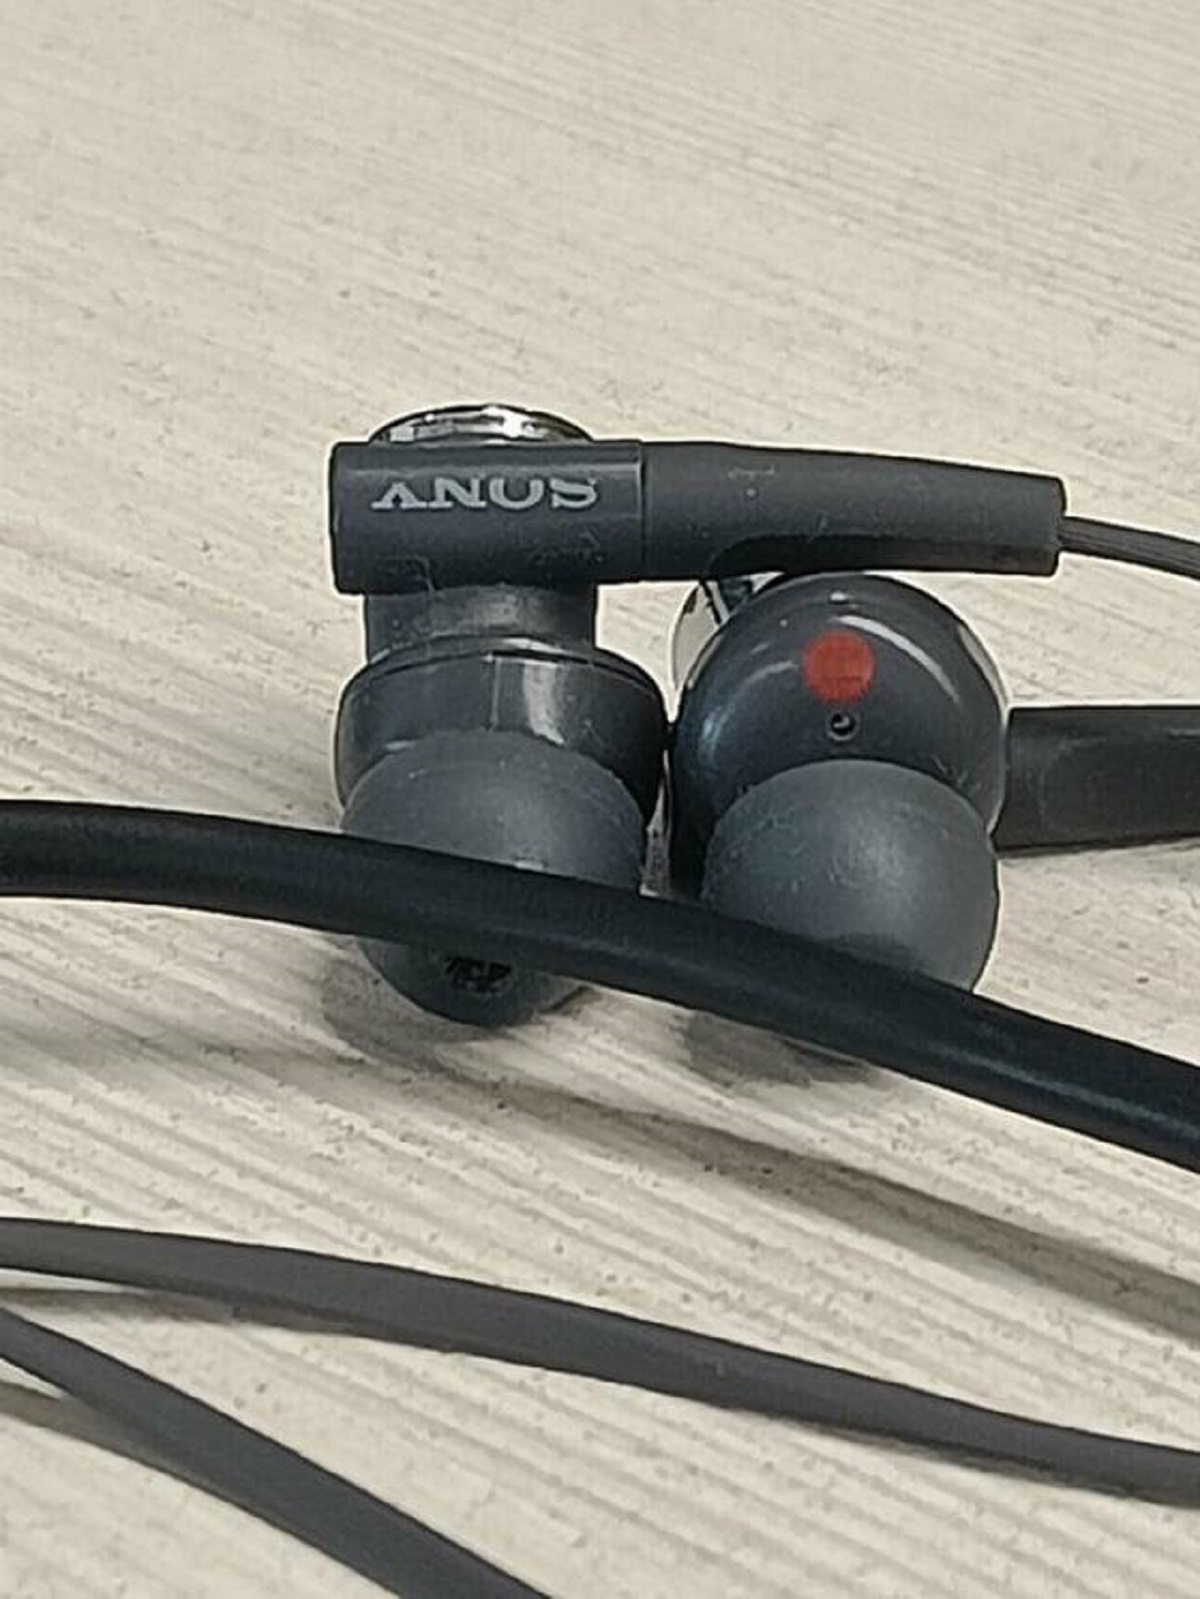 "It seems like my earphones have anus logo"